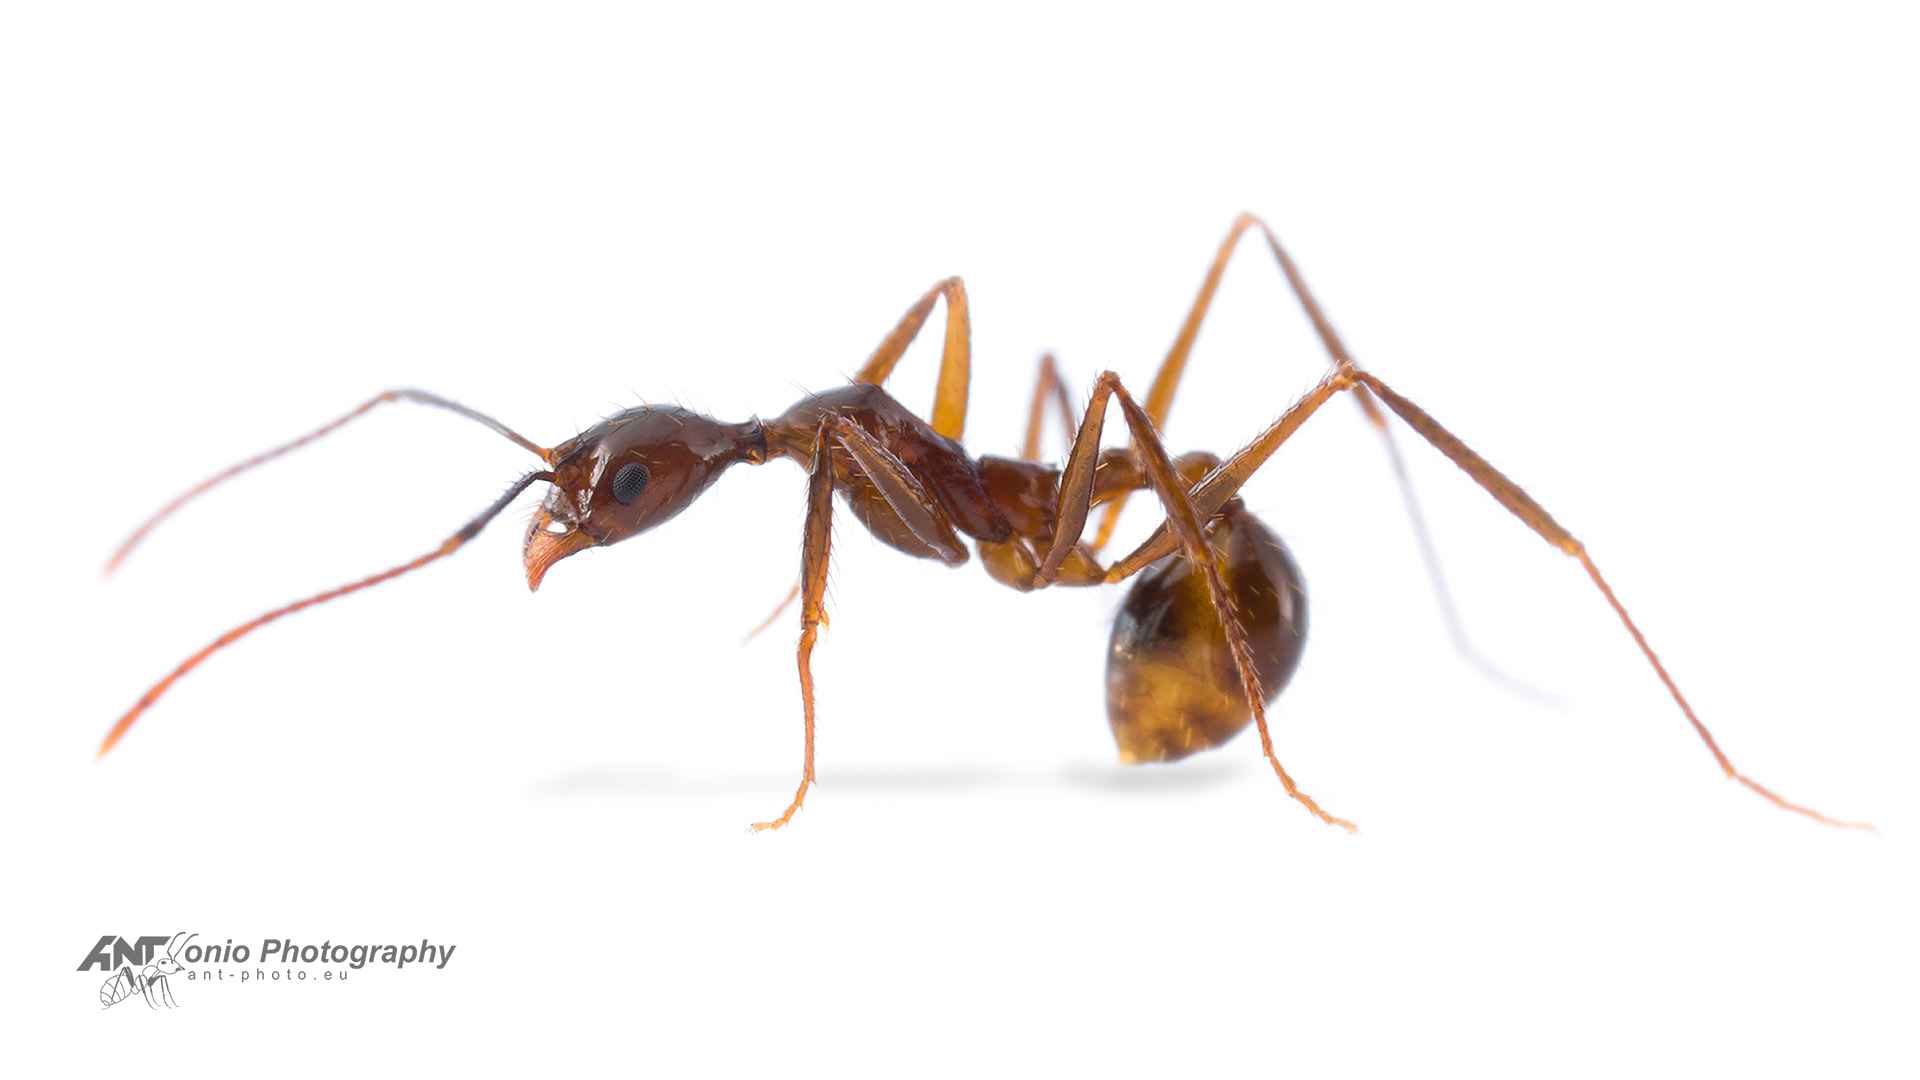 Ant Aphaenogaster feae worker